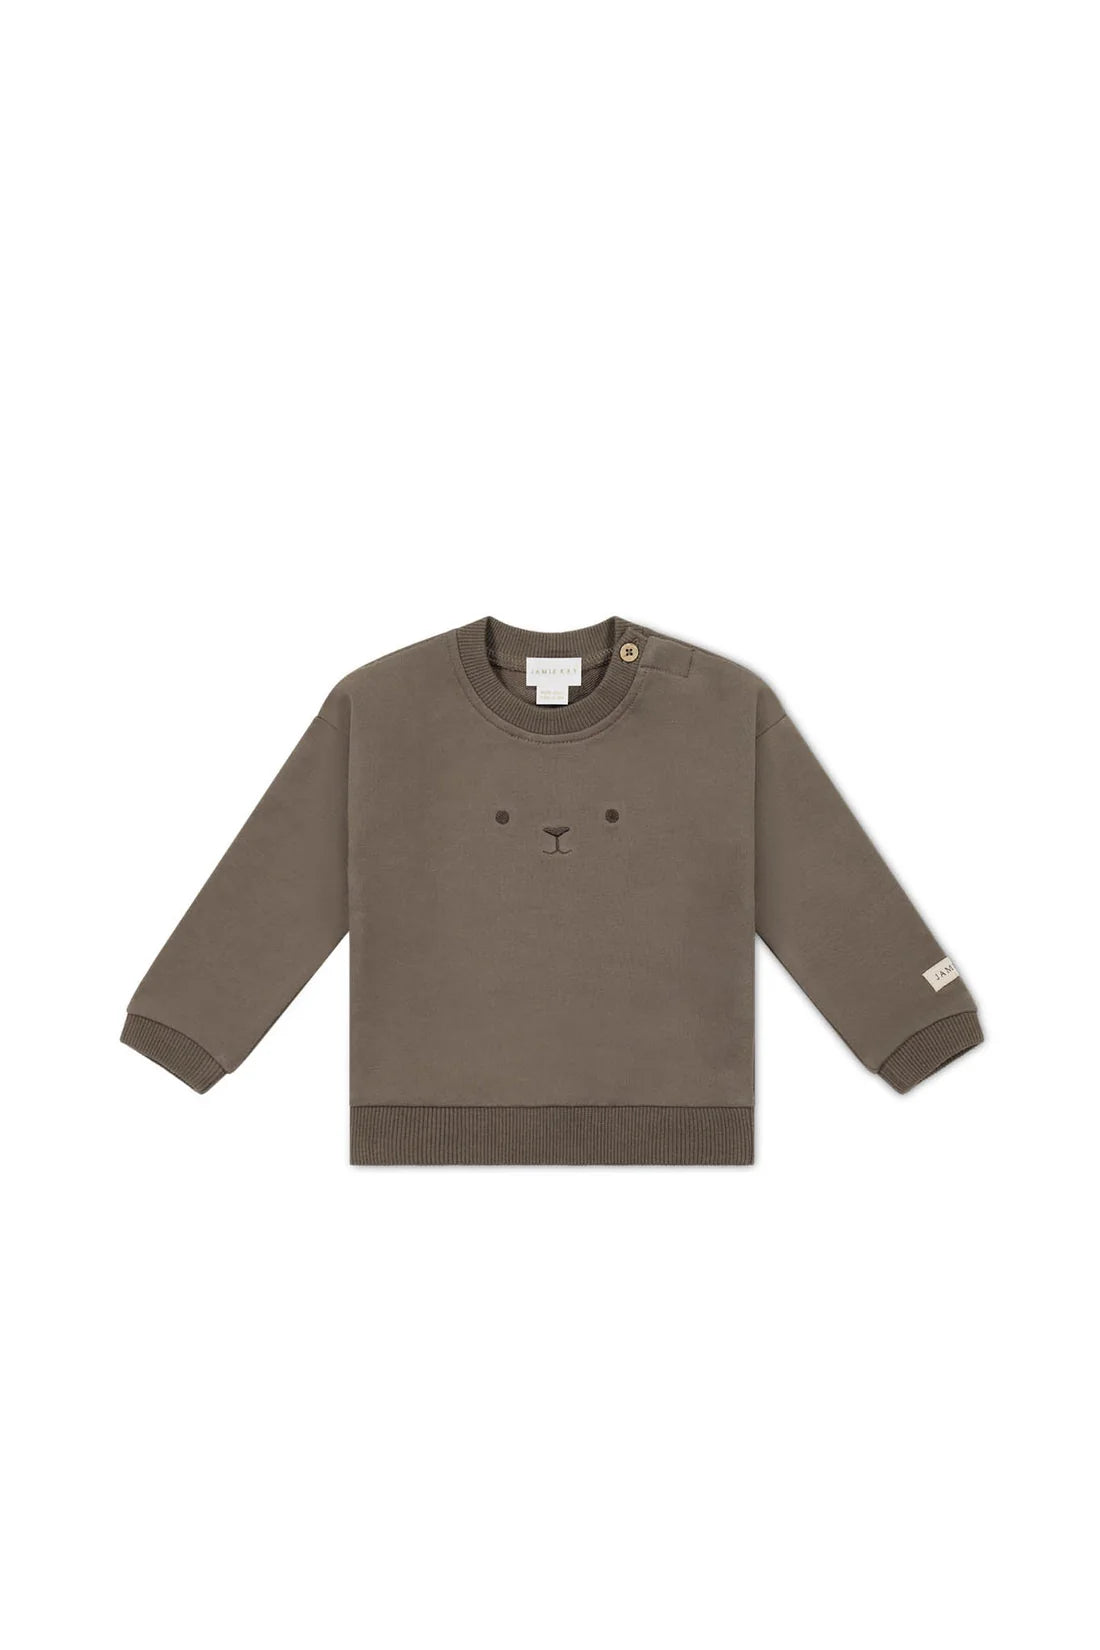 Organic Cotton Damien Sweatshirt - Bear